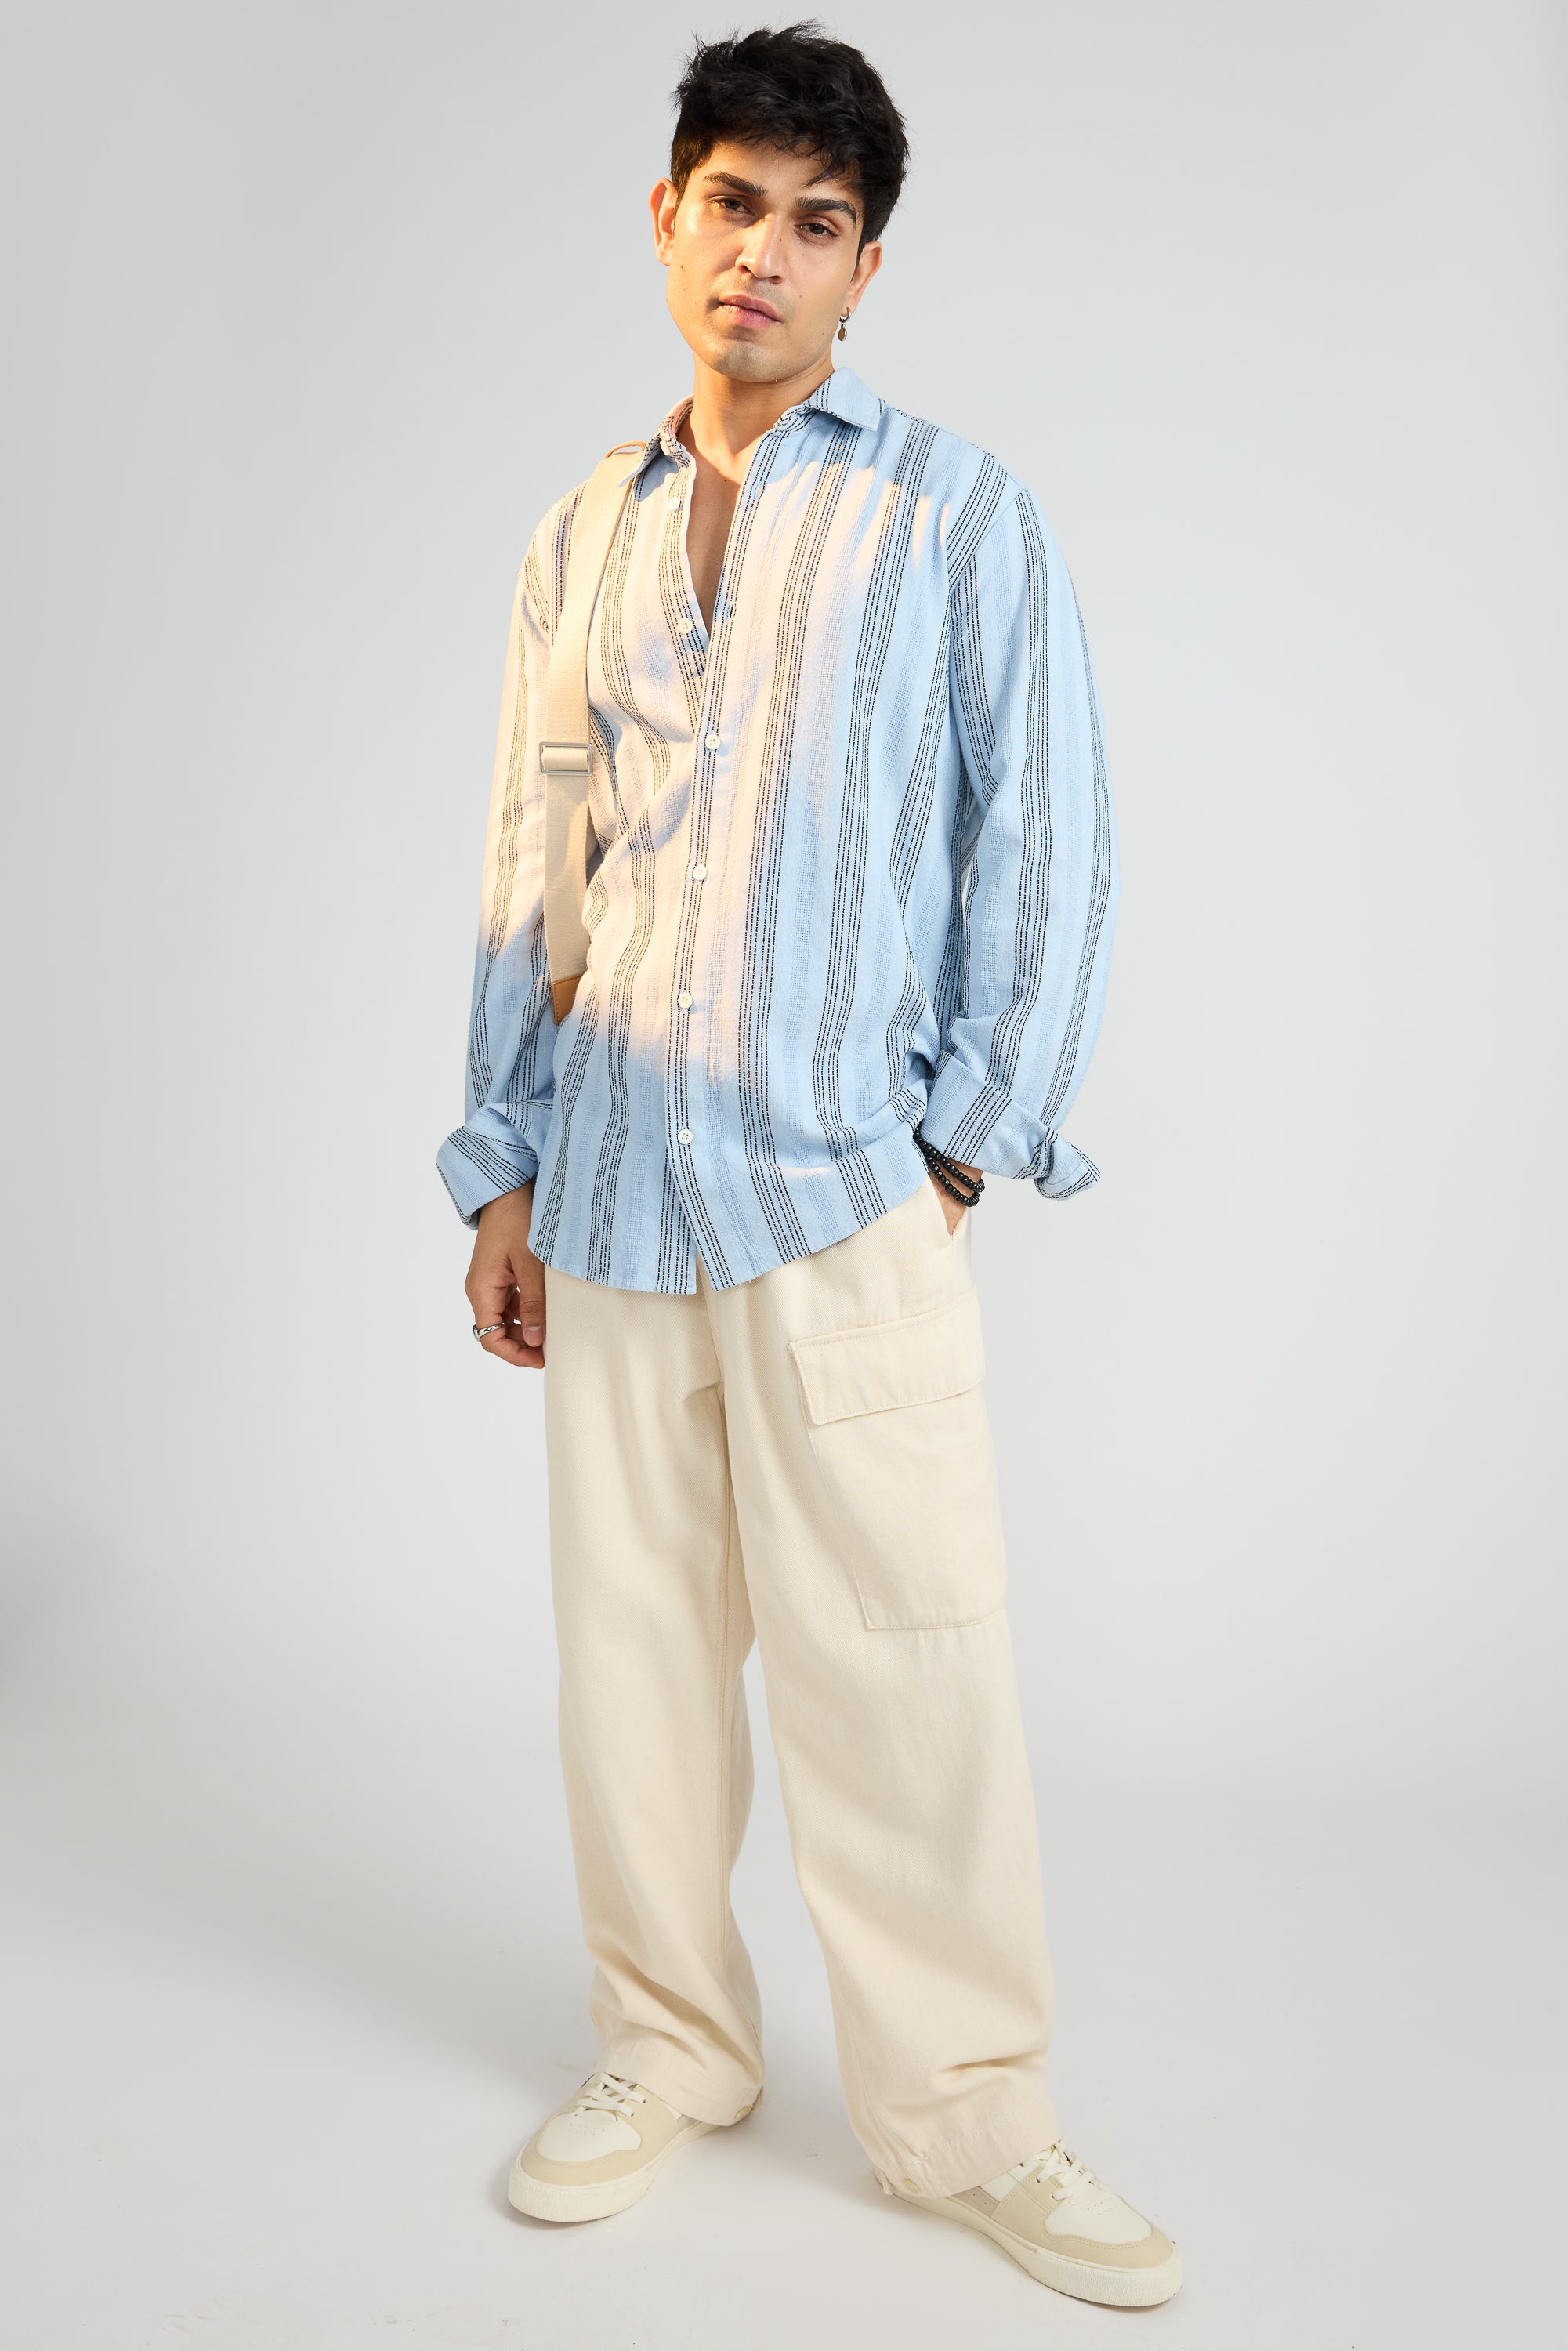 Textured Knit Full Sleeves Shirt-Blue/White Stripes